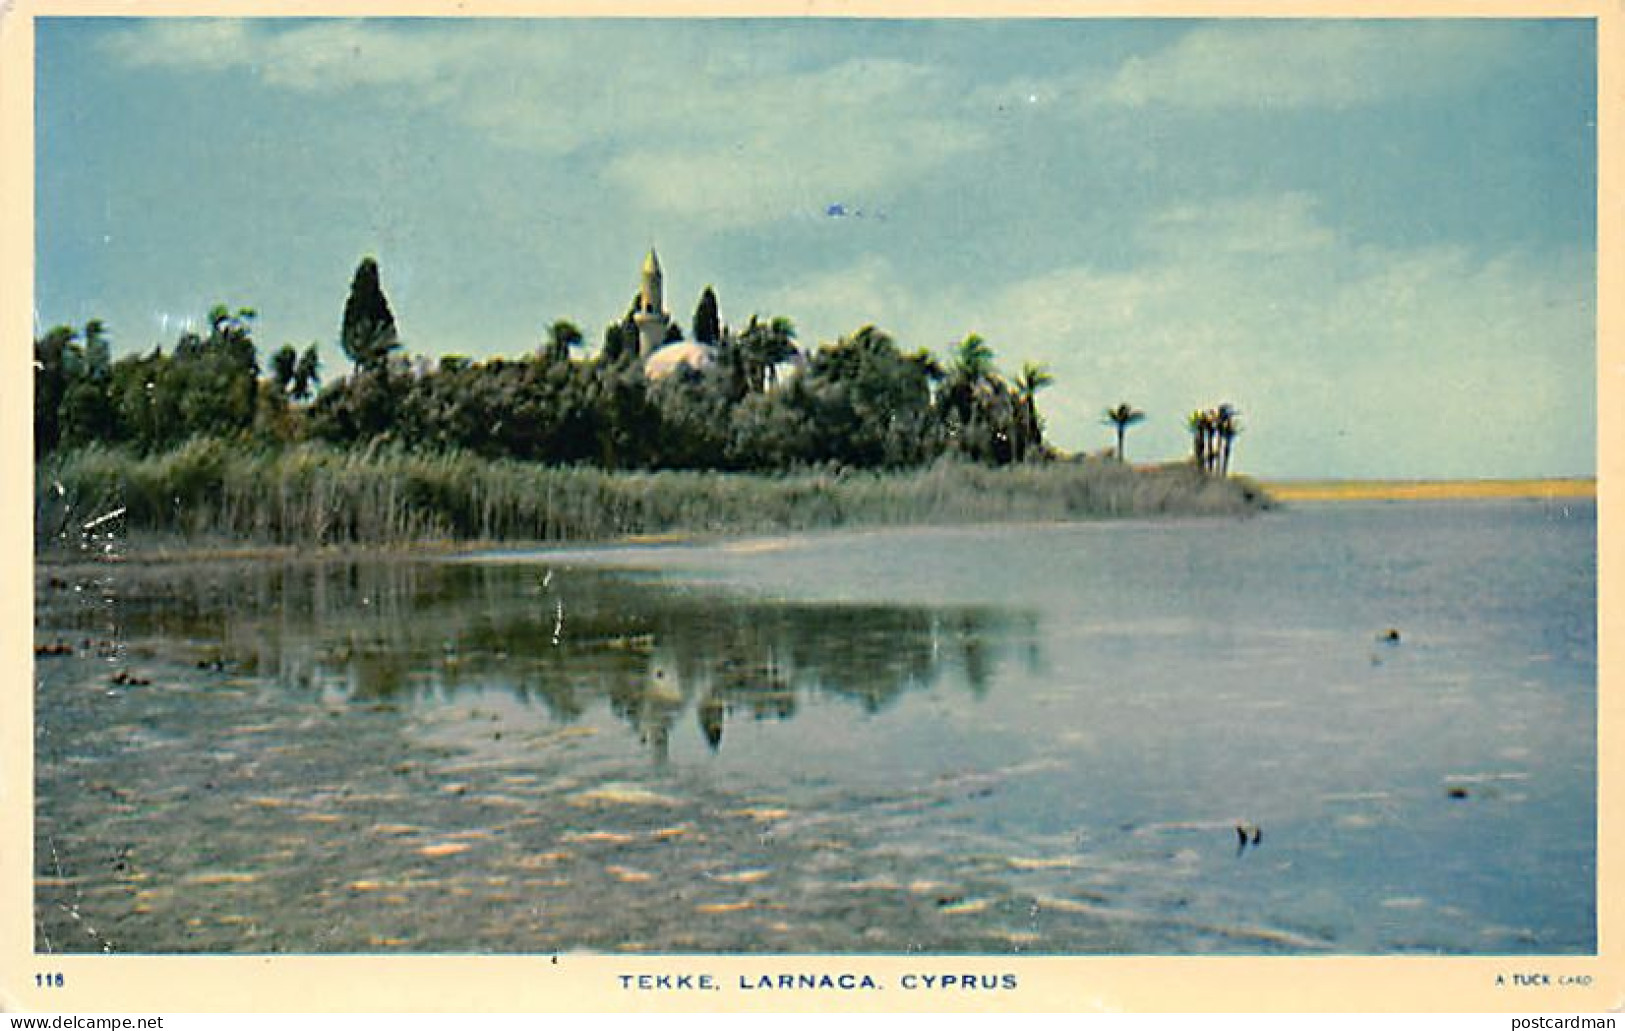 Cyprus - LARNACA - Tekke - Publ. A. Tuck 118 - Cyprus